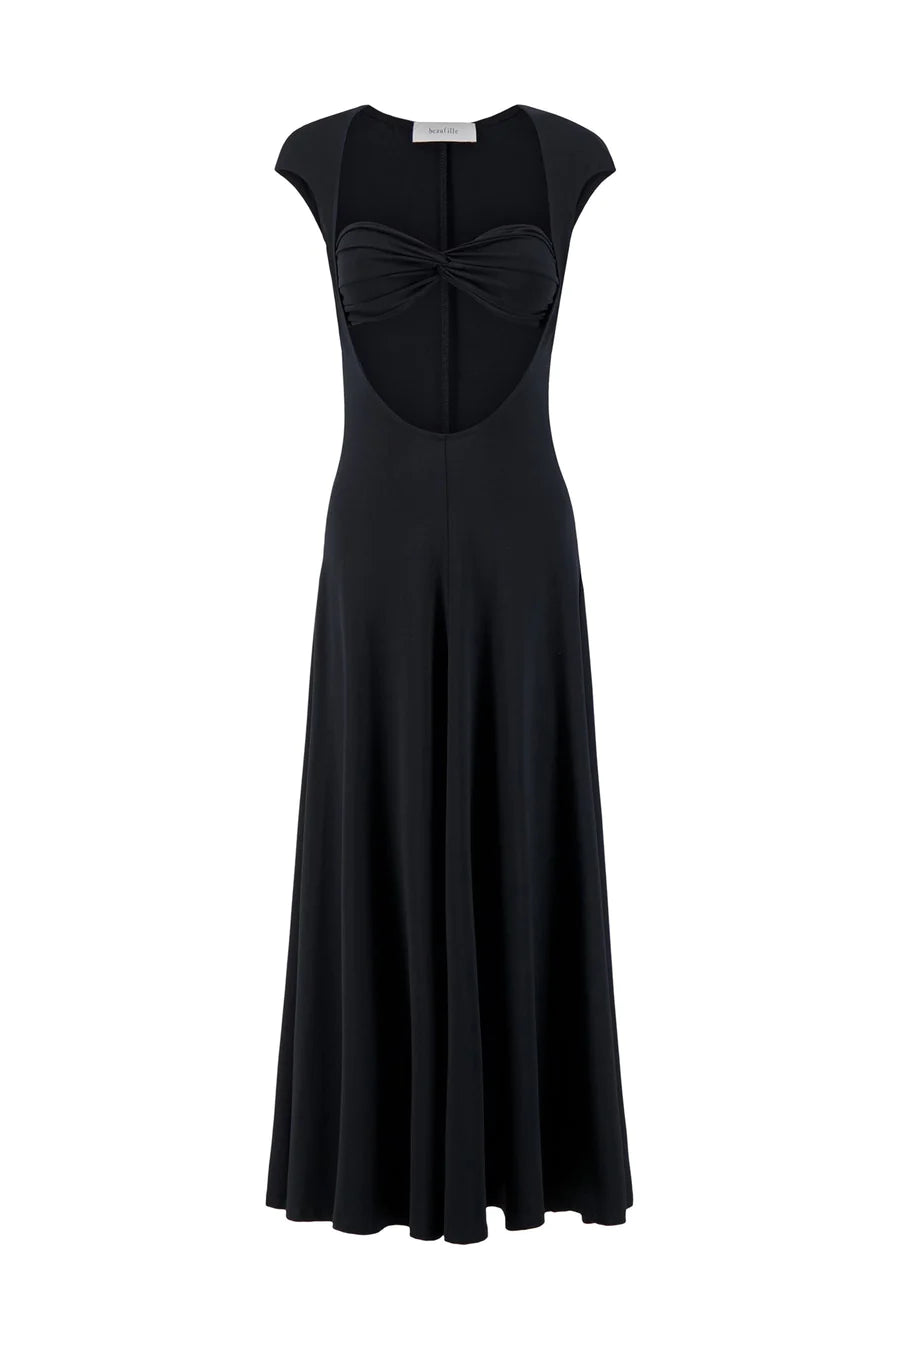 Beaufille Black Baes Dress